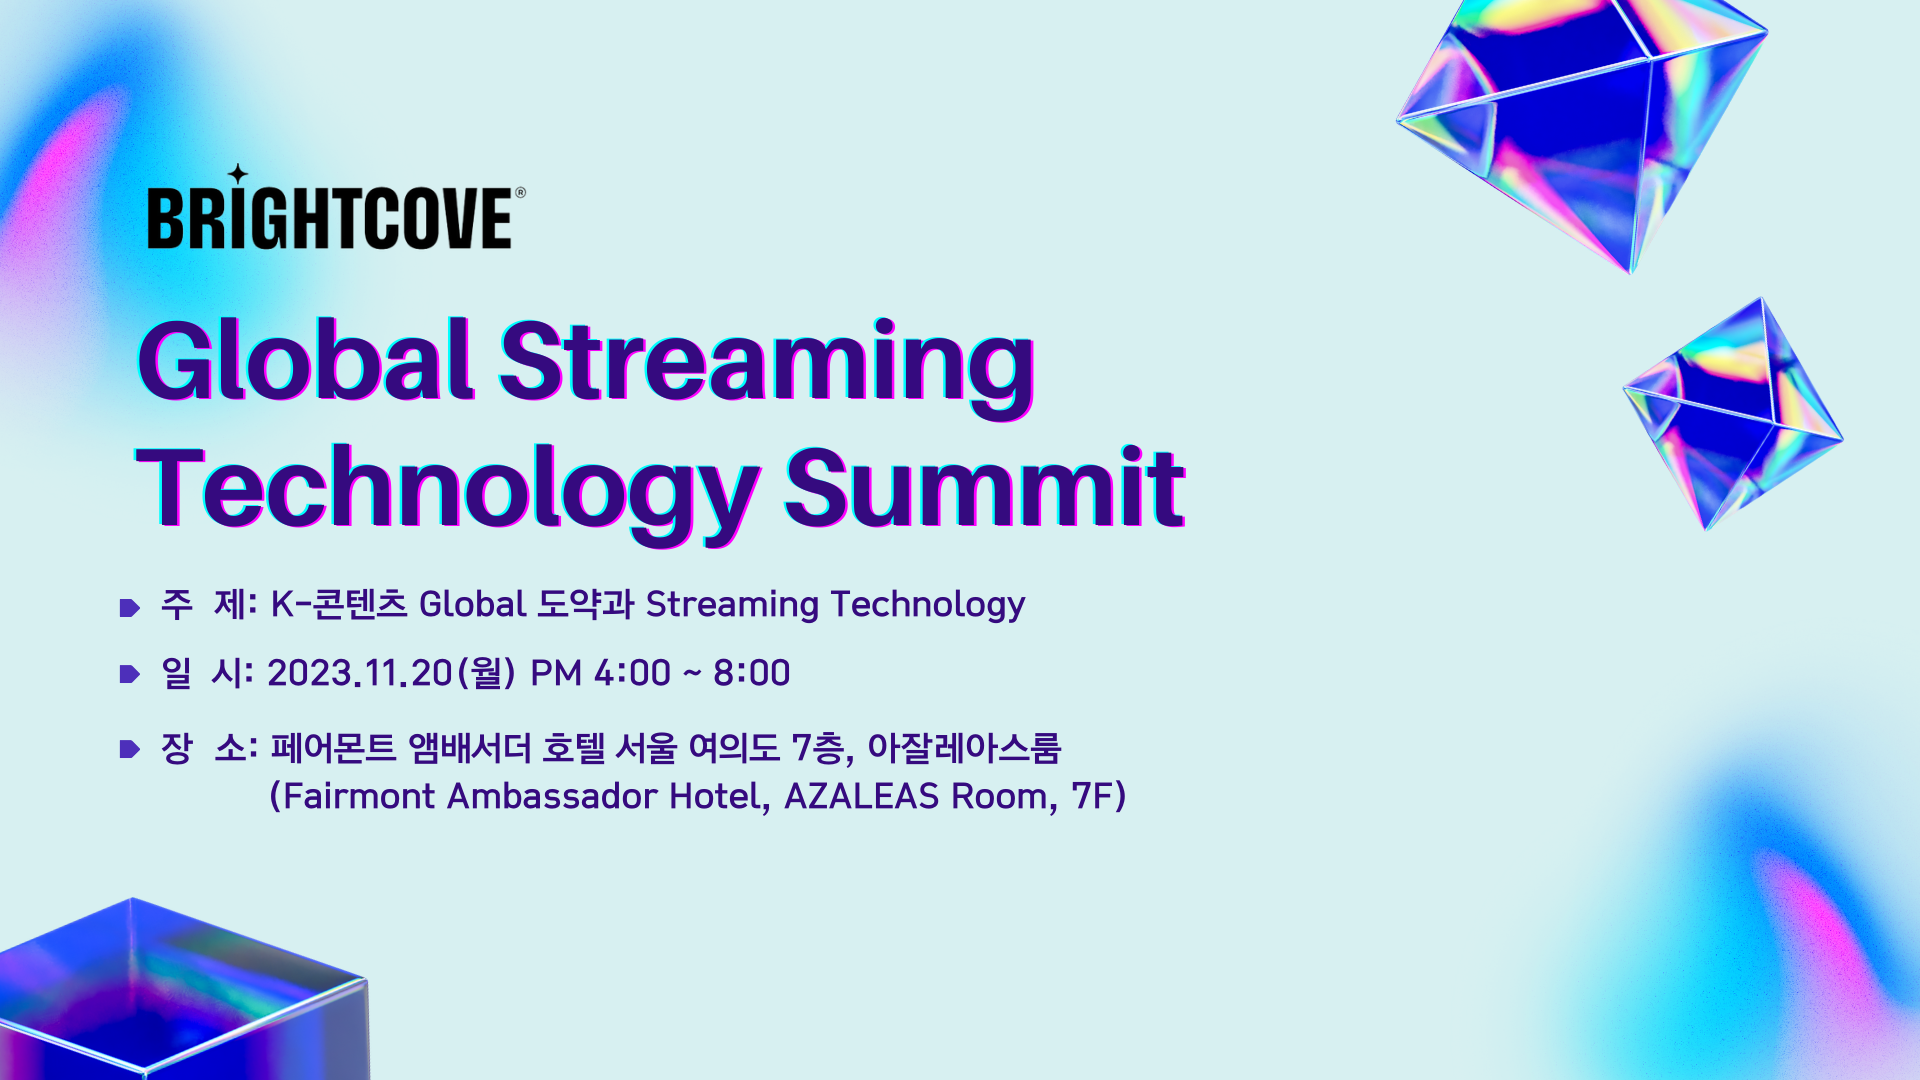 Global Streaming Technology Summit - 적합한 비디오 스트리밍 솔루션을 선택하는 법 (이동은 지사장)